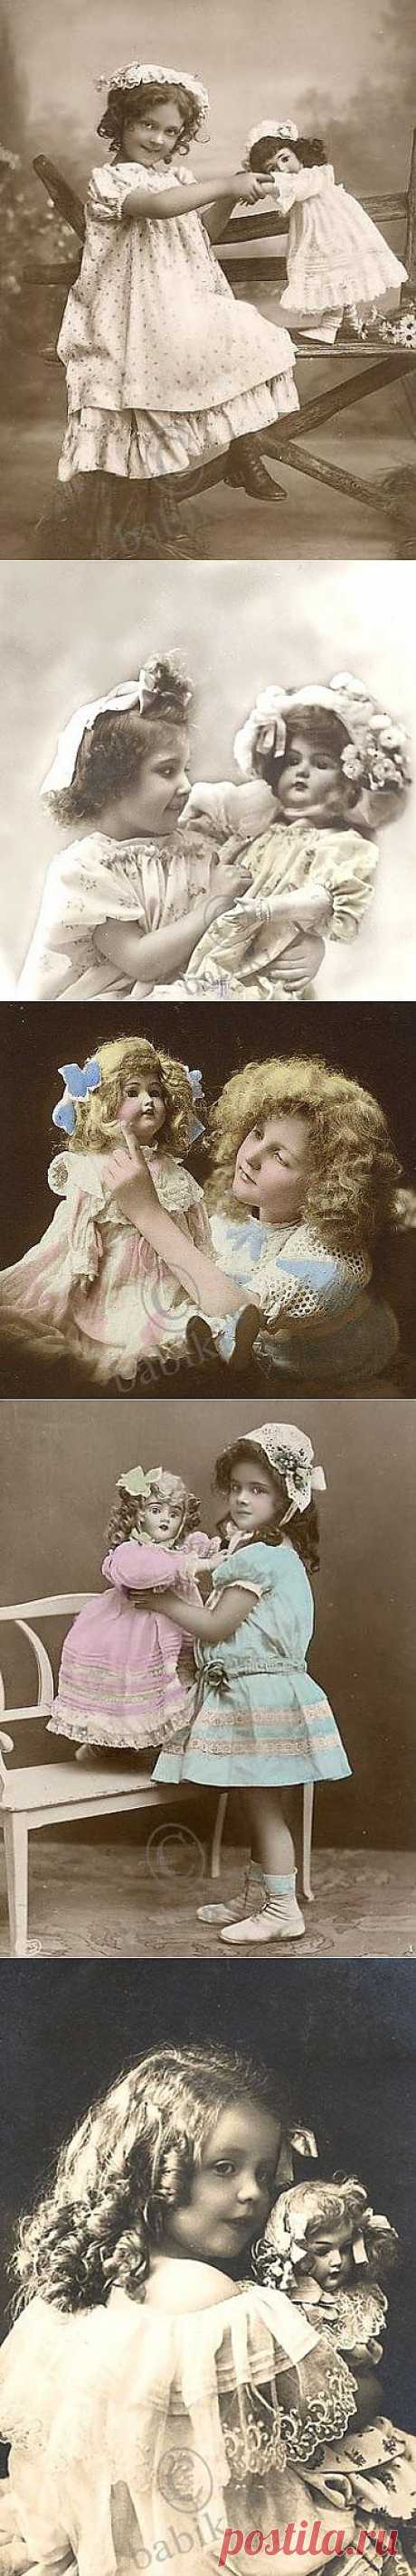 Красивые фото - ретро дети с ретро куклами / Красивые картинки, фото кукол / Бэйбики. Куклы фото. Одежда для кукол